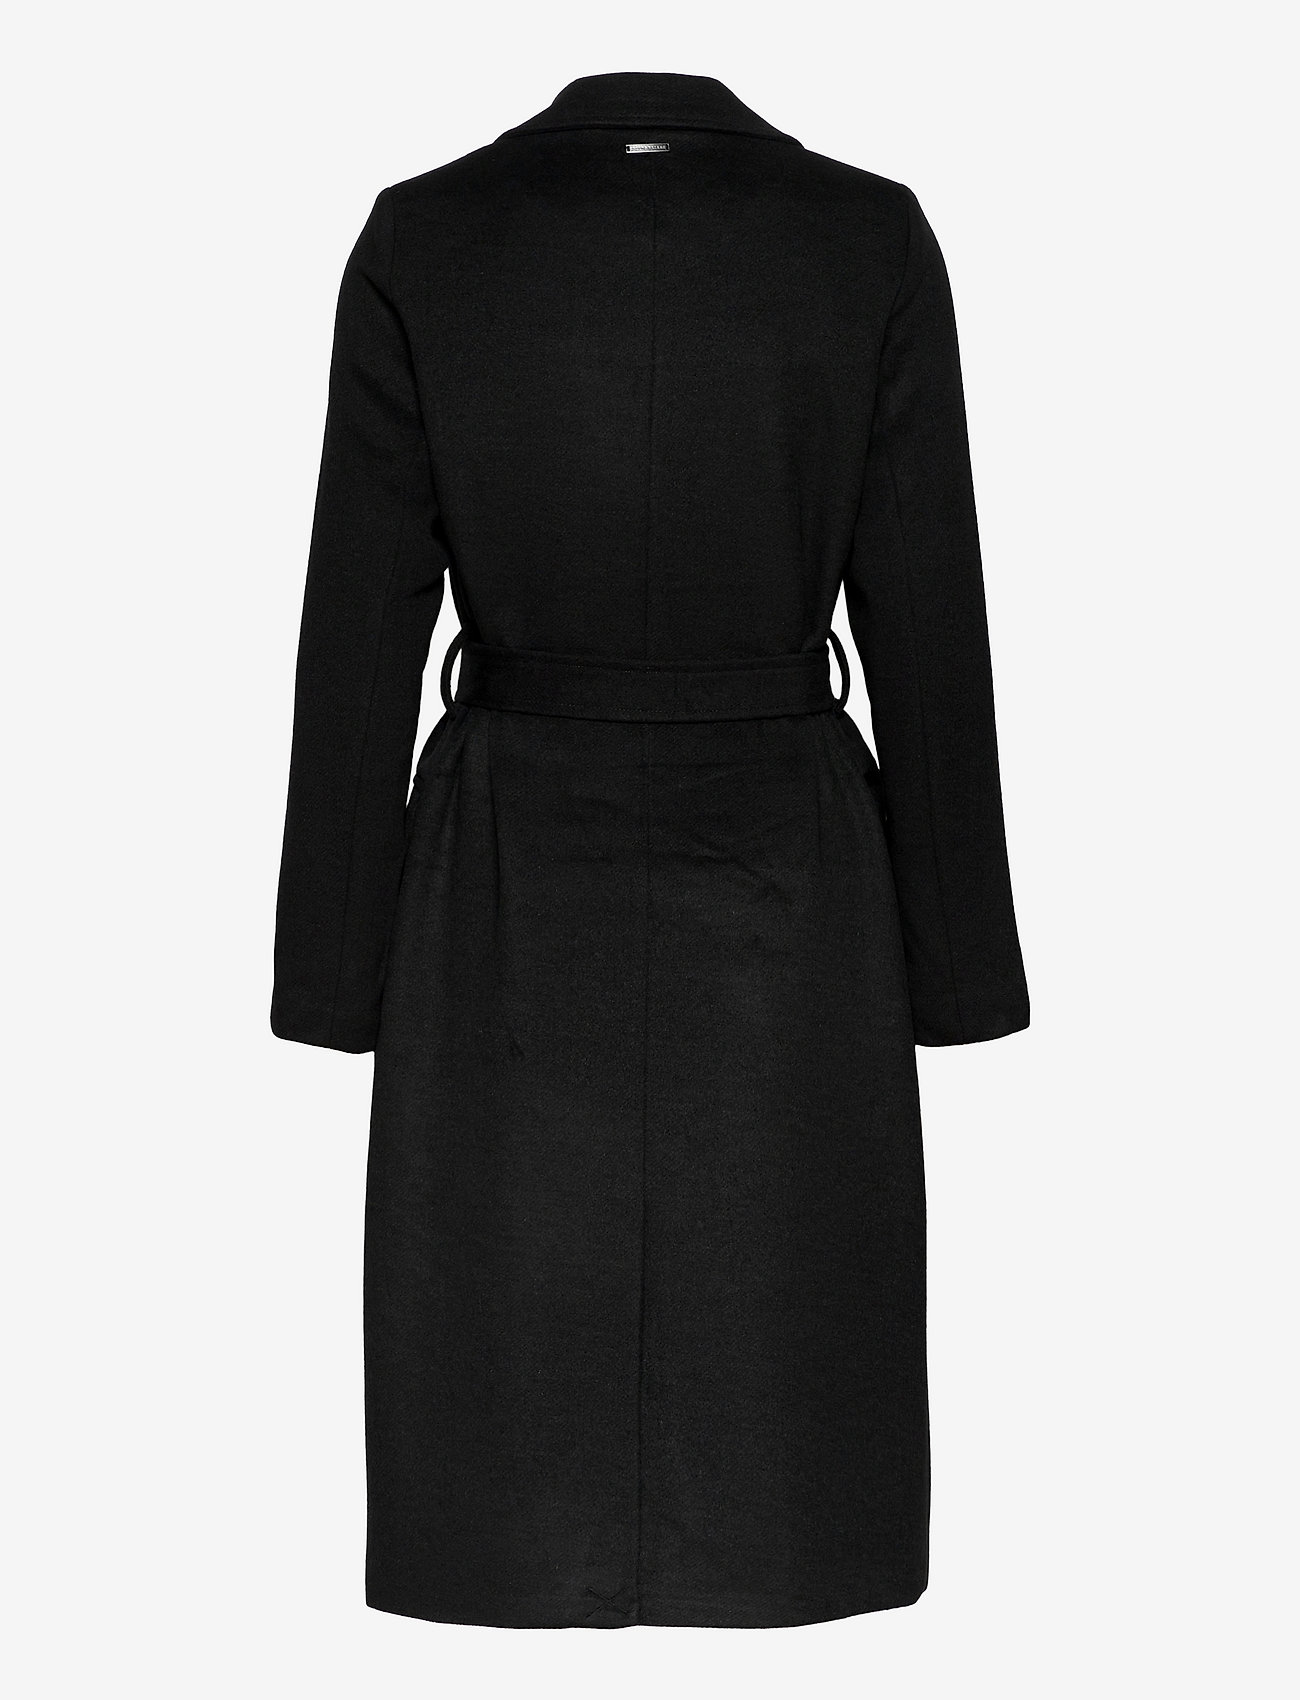 Bruuns Bazaar - CatarinaBBNovelle coat - vinterfrakker - black - 1